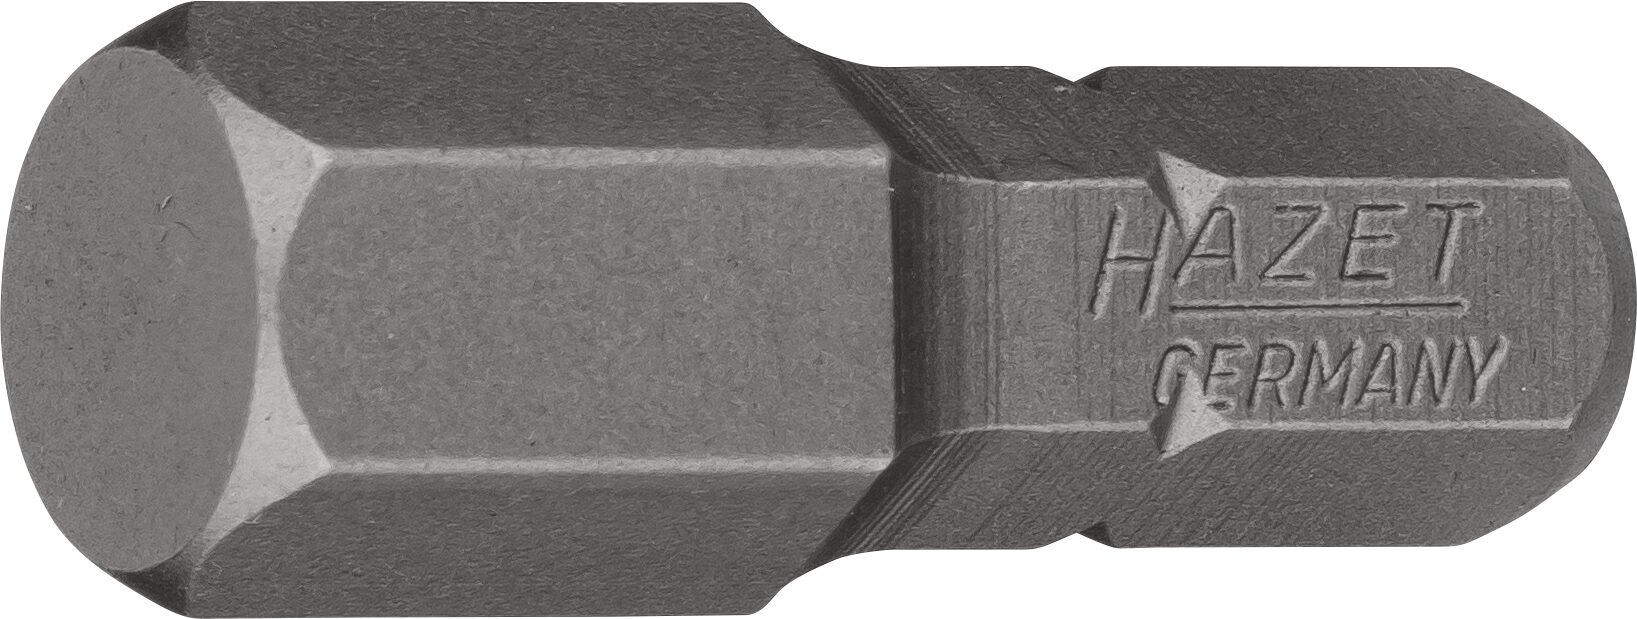 HAZET Bit 2206-10 · Sechskant massiv 8 (5/16 Zoll) · Innen Sechskant Profil · 10 mm